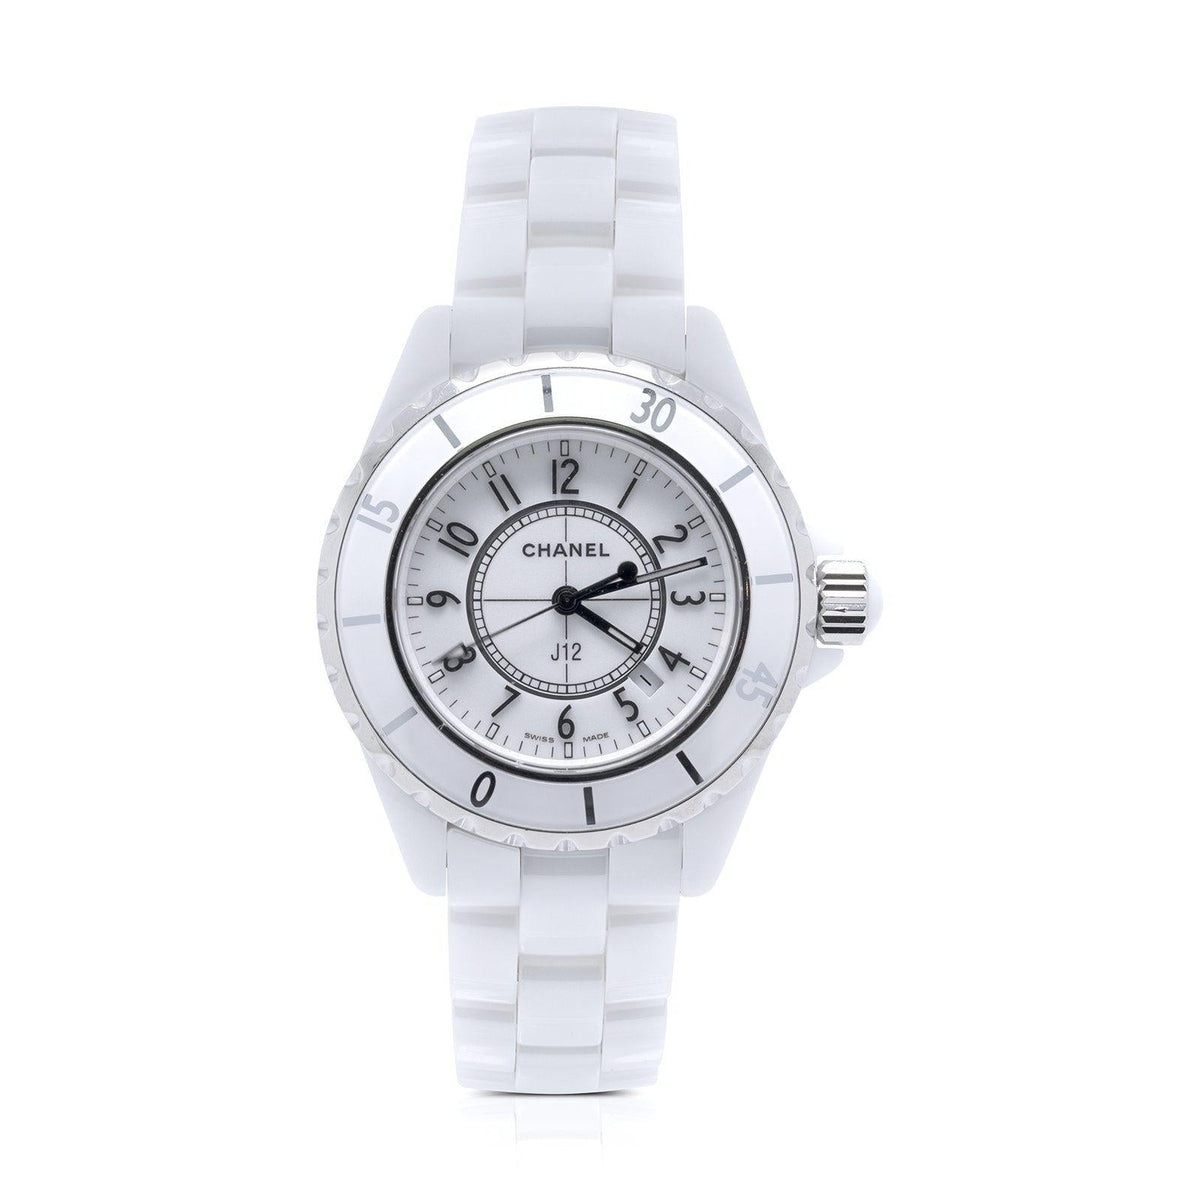 Chanel White Ceramic J12 Watch